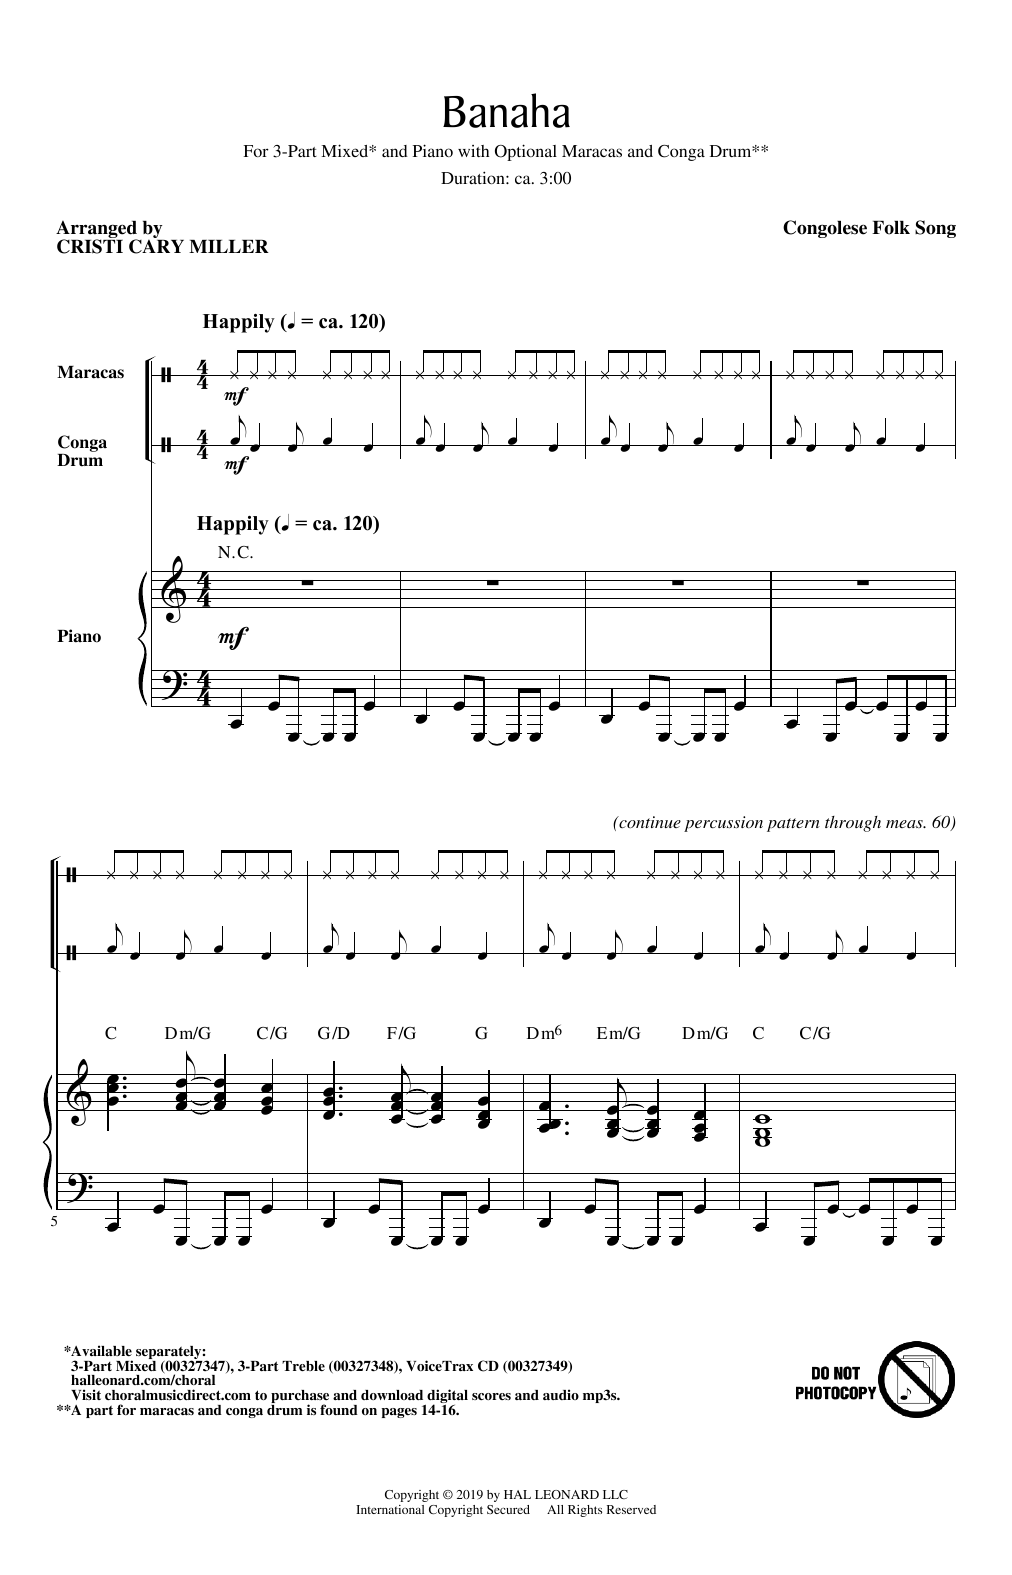 Congolese Folk Song Banaha (arr. Cristi Cary Miller) sheet music notes and chords arranged for 3-Part Treble Choir